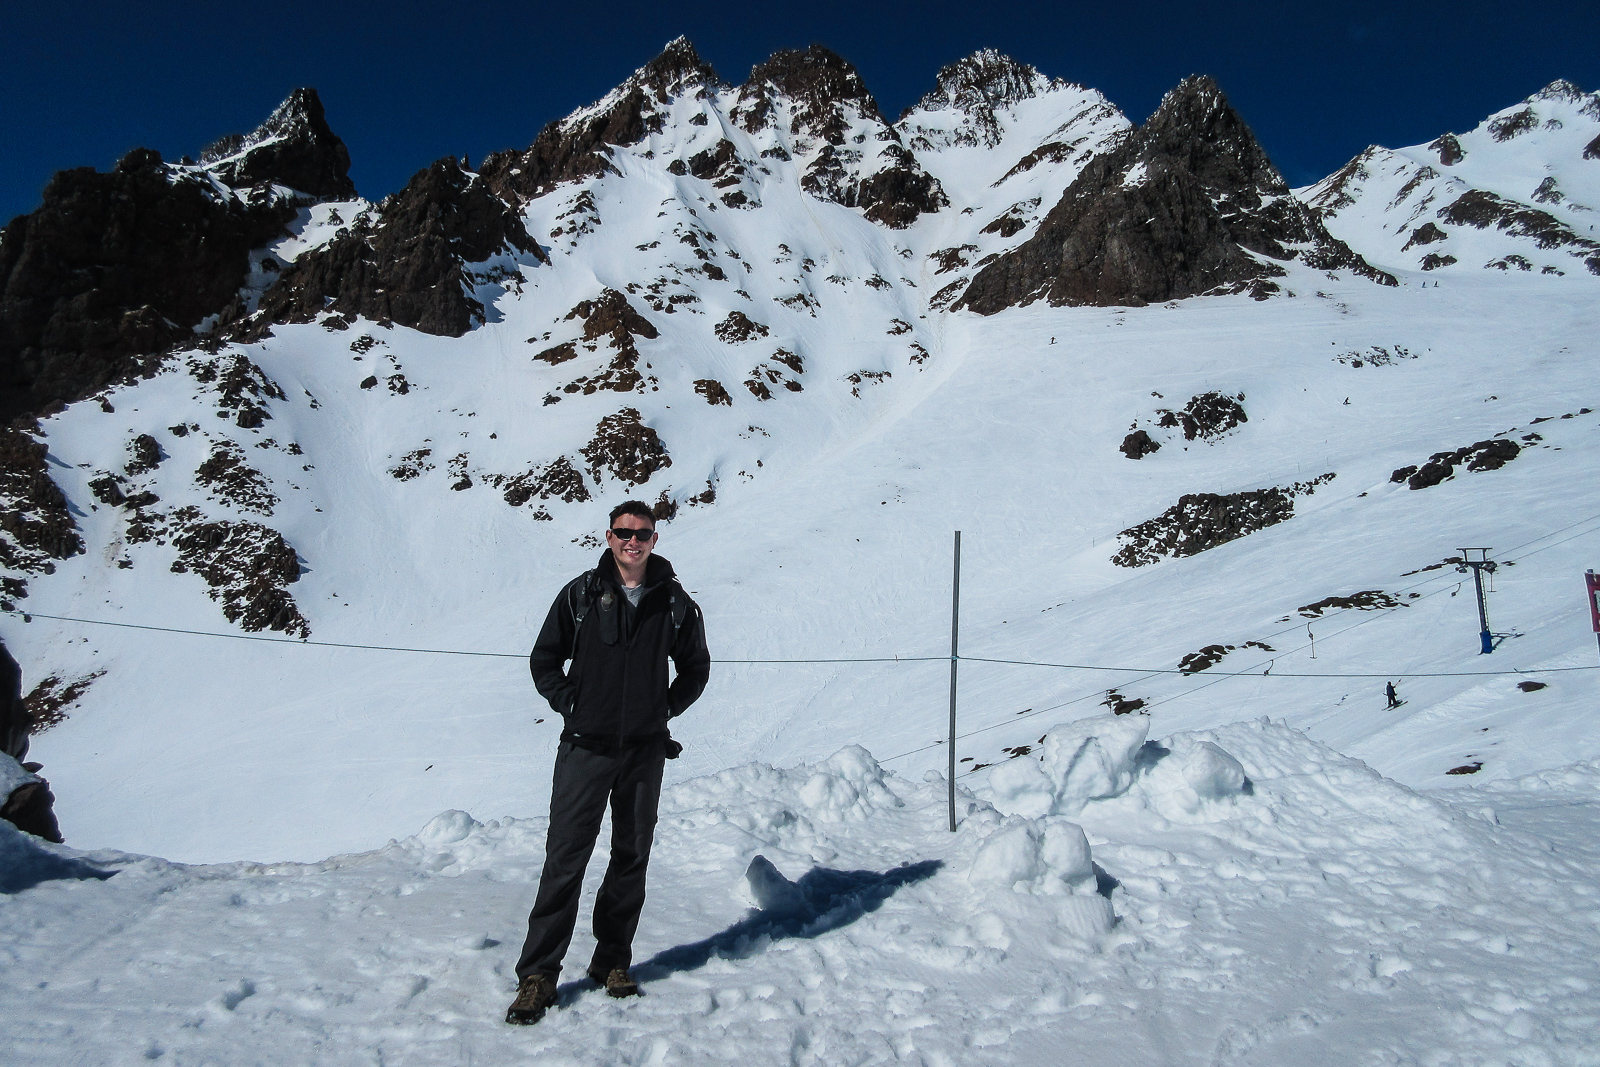 Mark at Whakapapa Ski Area, ski resorts New Zealand